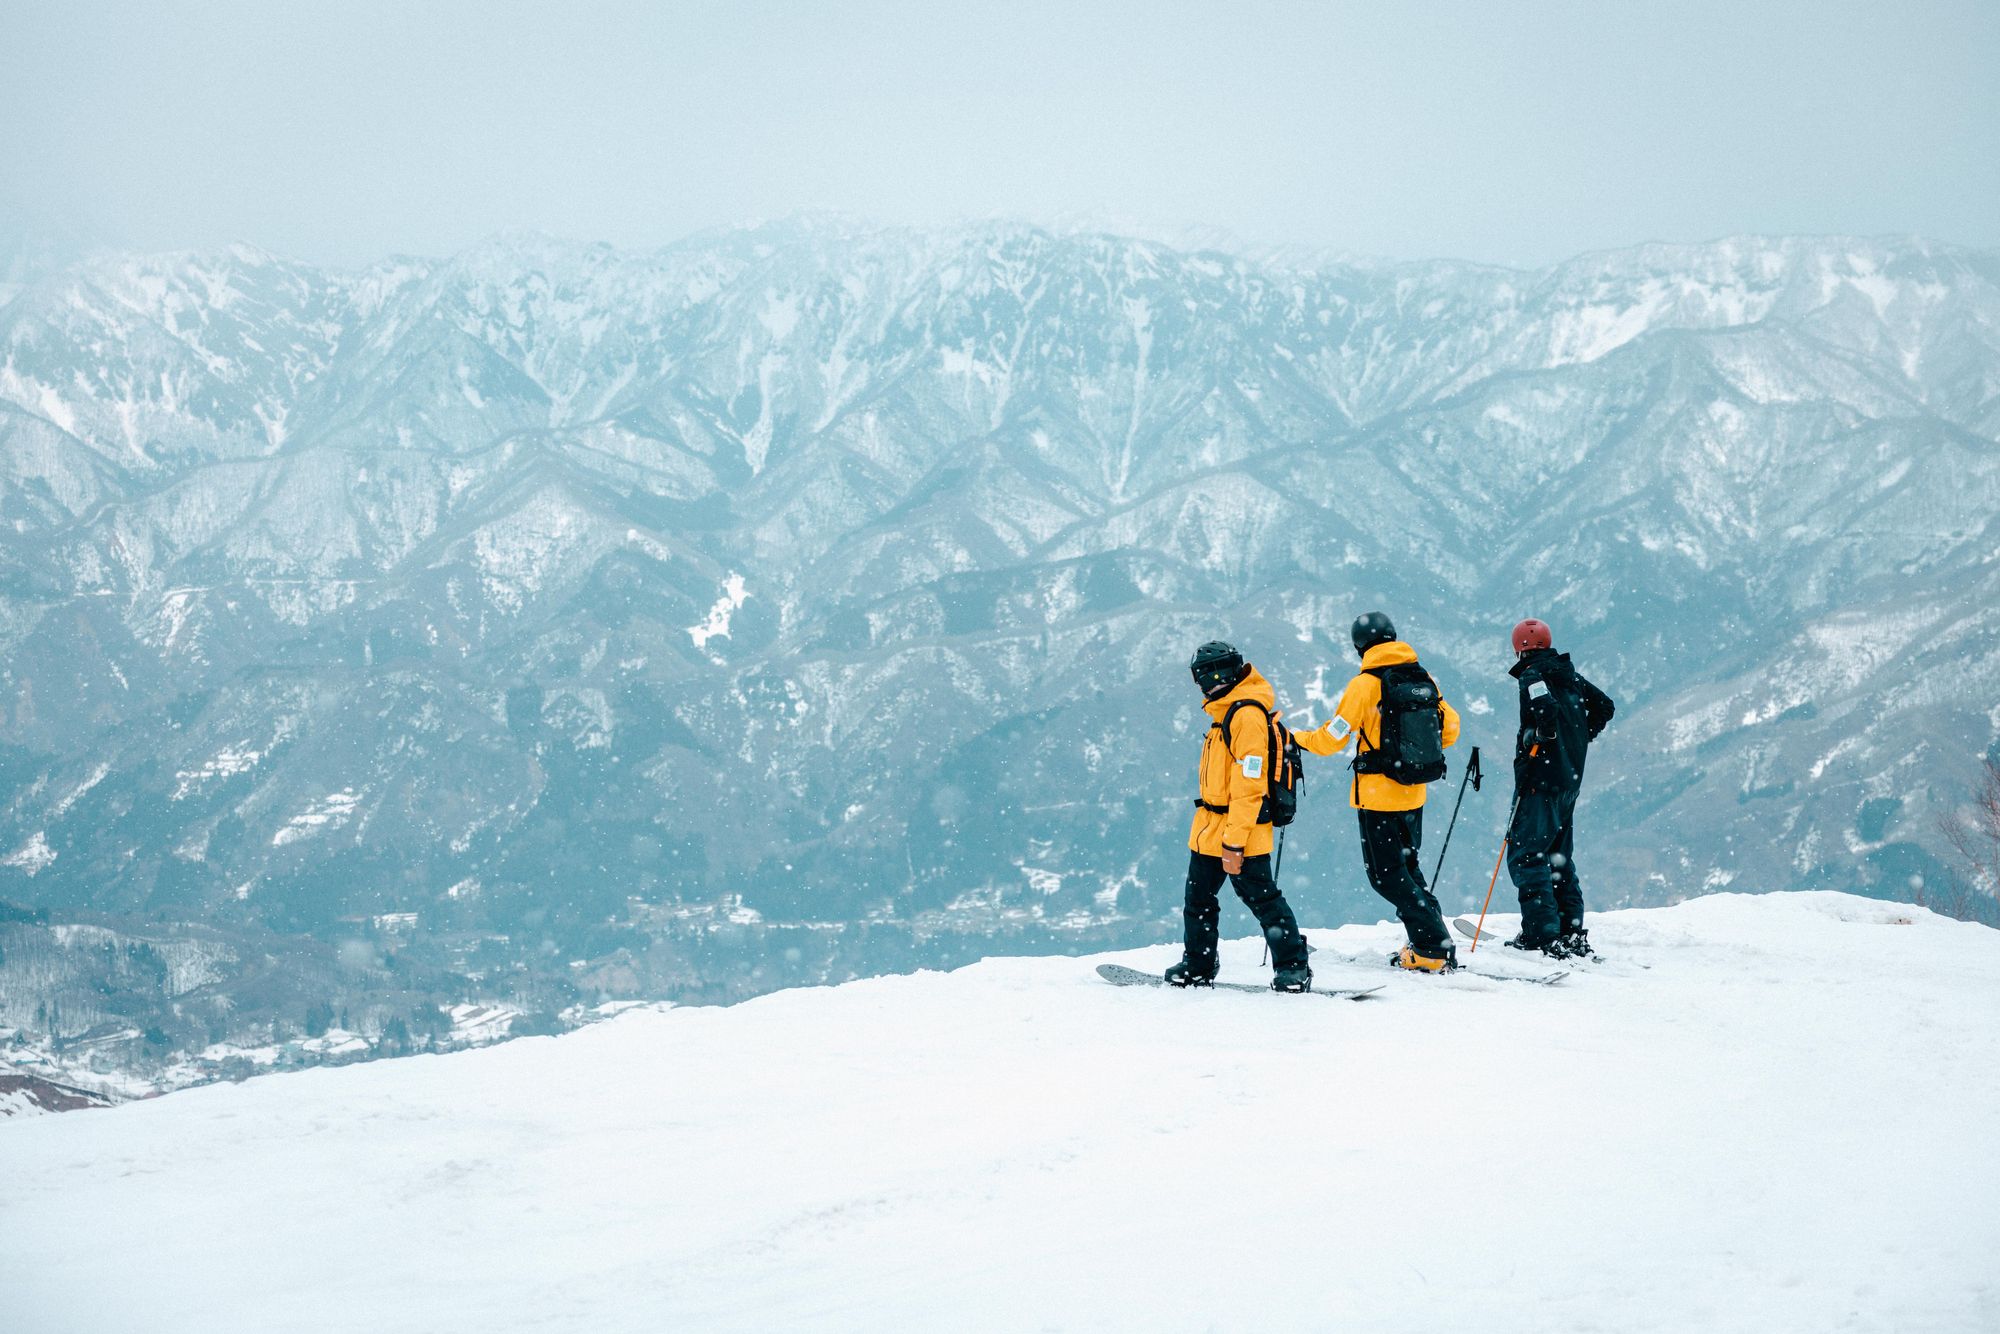 Tsugaike Mountain Resort, part of Hakuba Valley, becomes the home base for Slopes in Japan